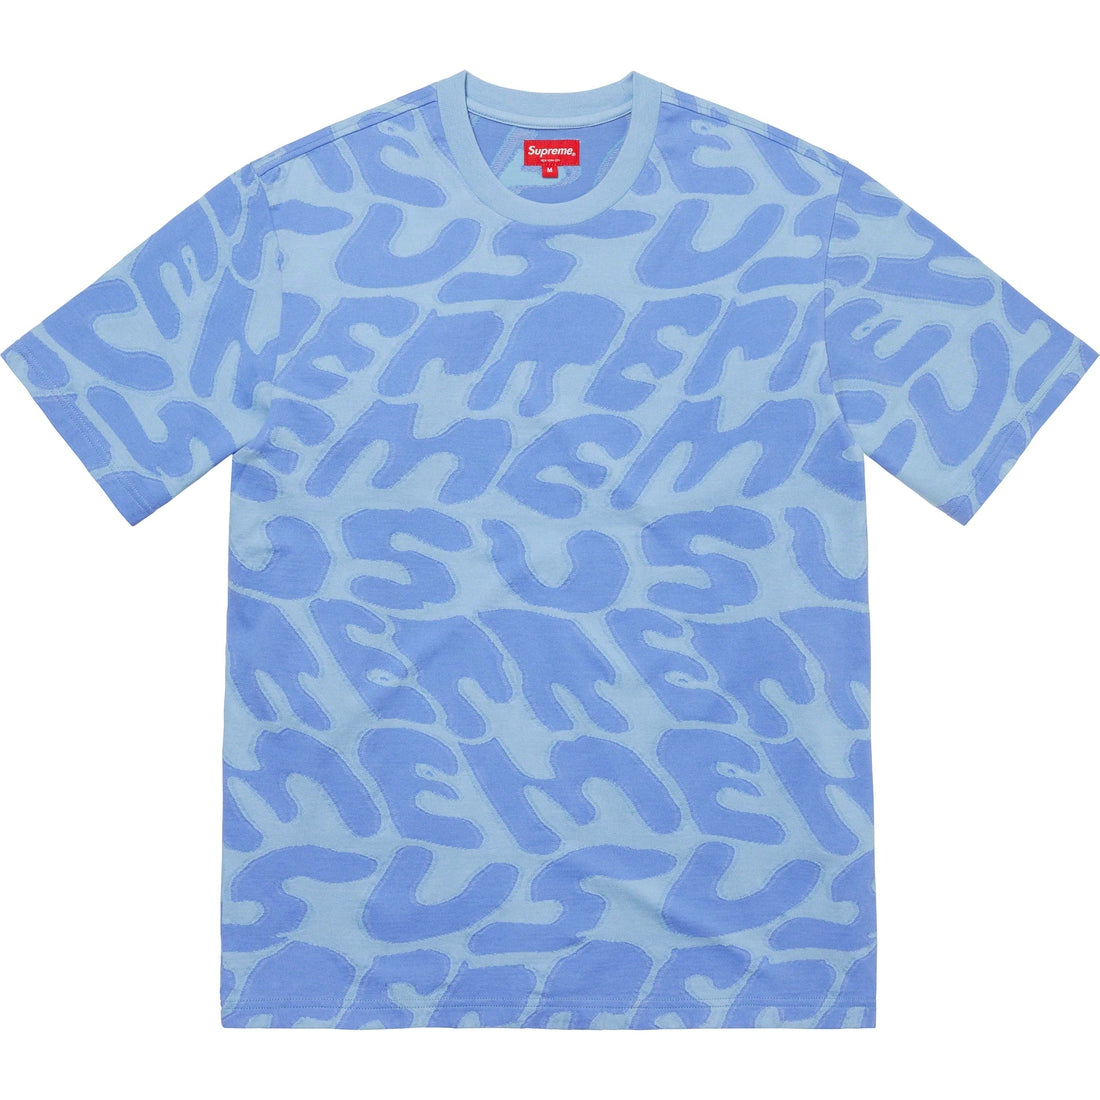 Supreme Stacked Intarsia T-Shirt (Blue)